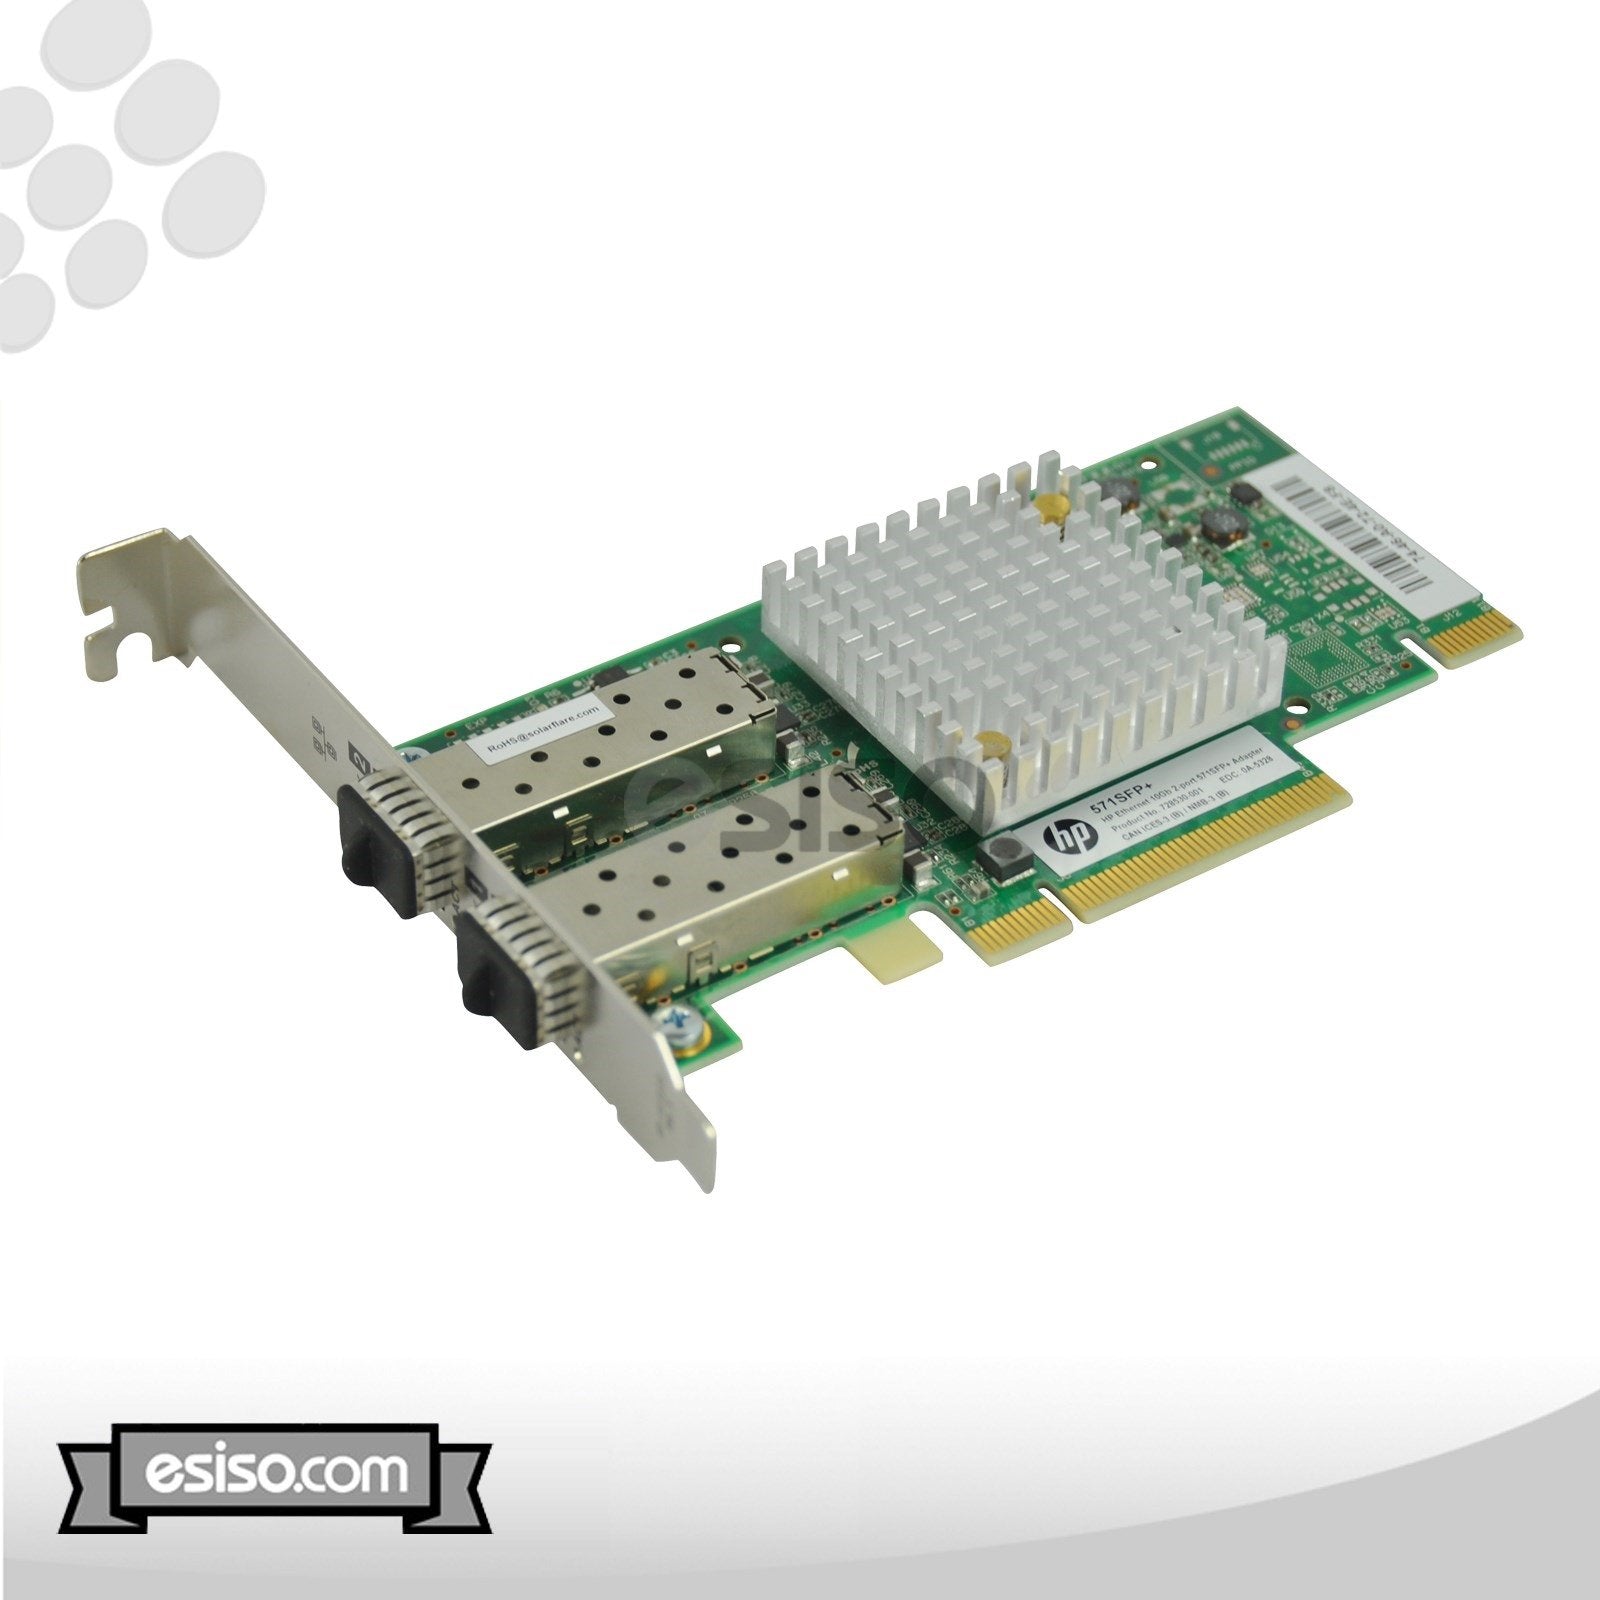 728987-B21 SFC9020-HP ETHERNET 10GBIT/S DUAL PORT 571FLR-SFP+ PCI-E ADAPTER CARD